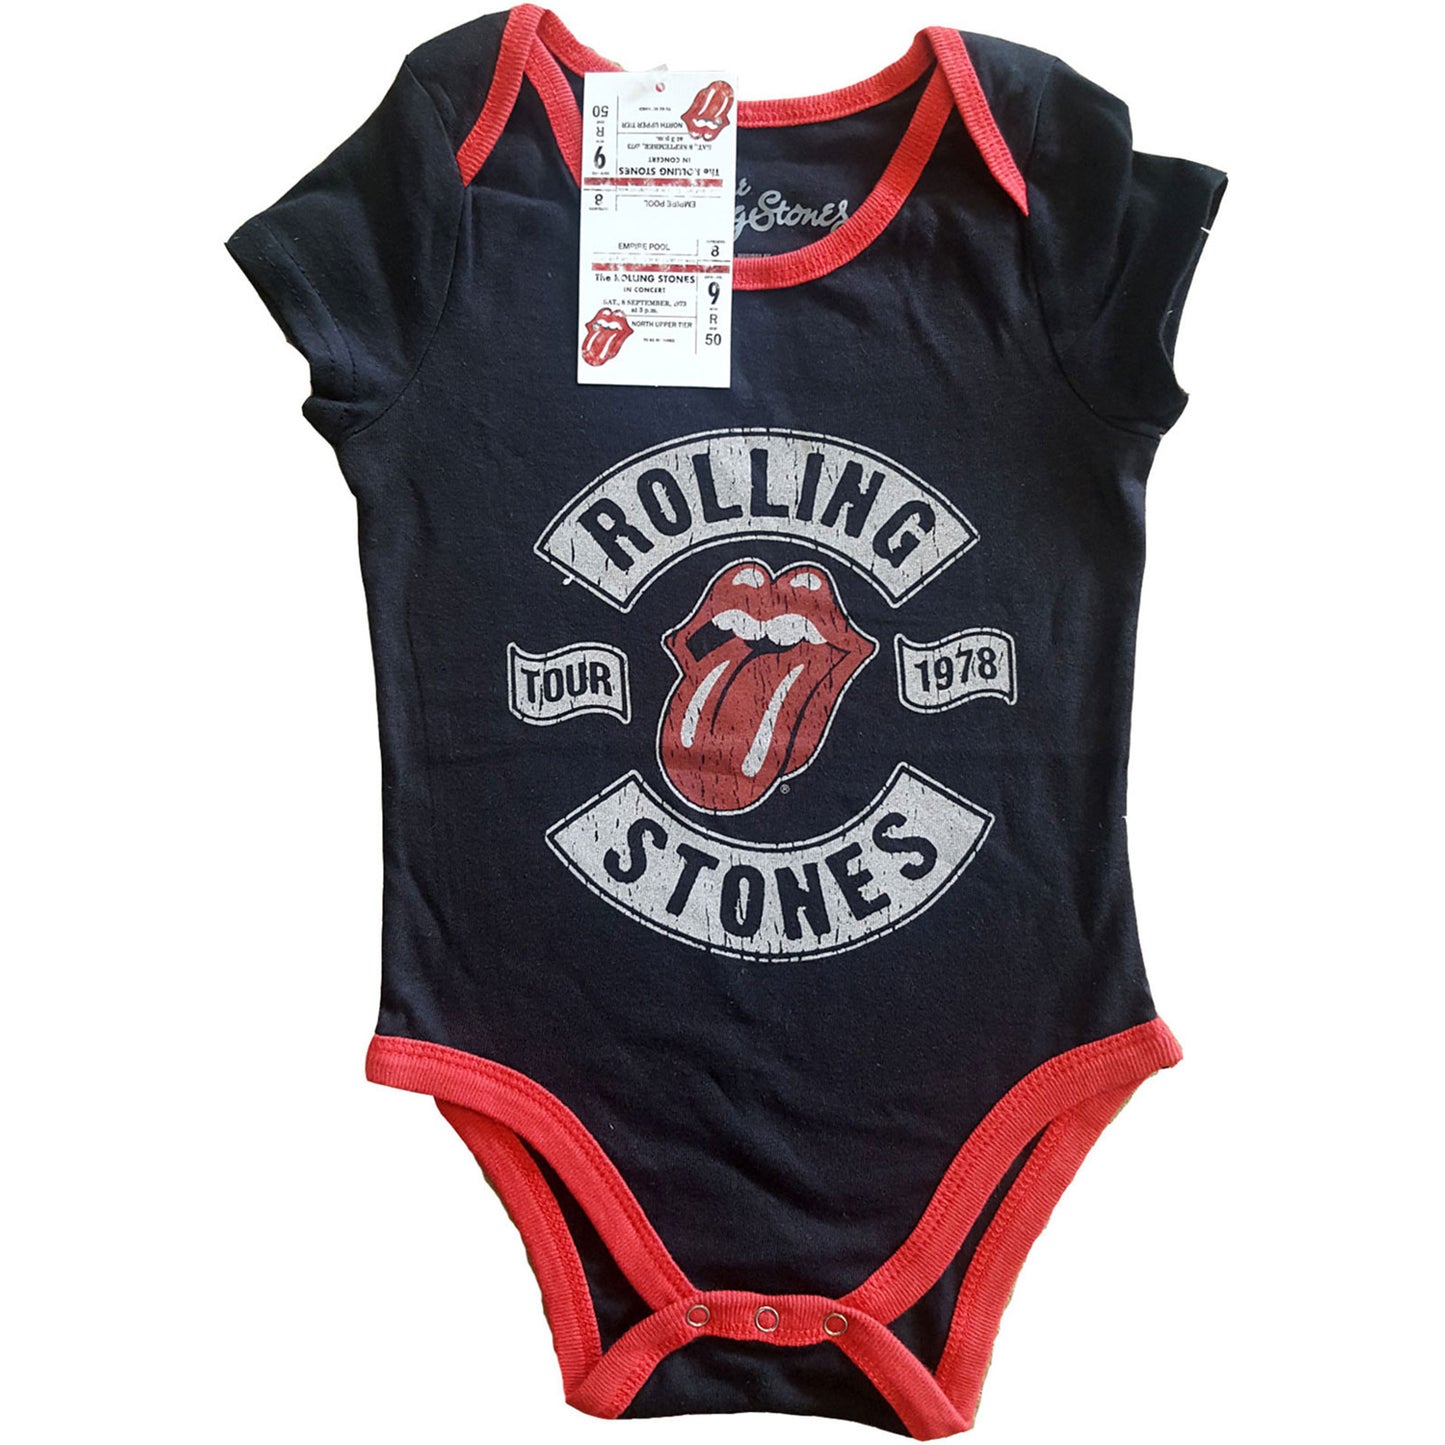 Rolling Stones Tour 1978 Baby Romper Onesie